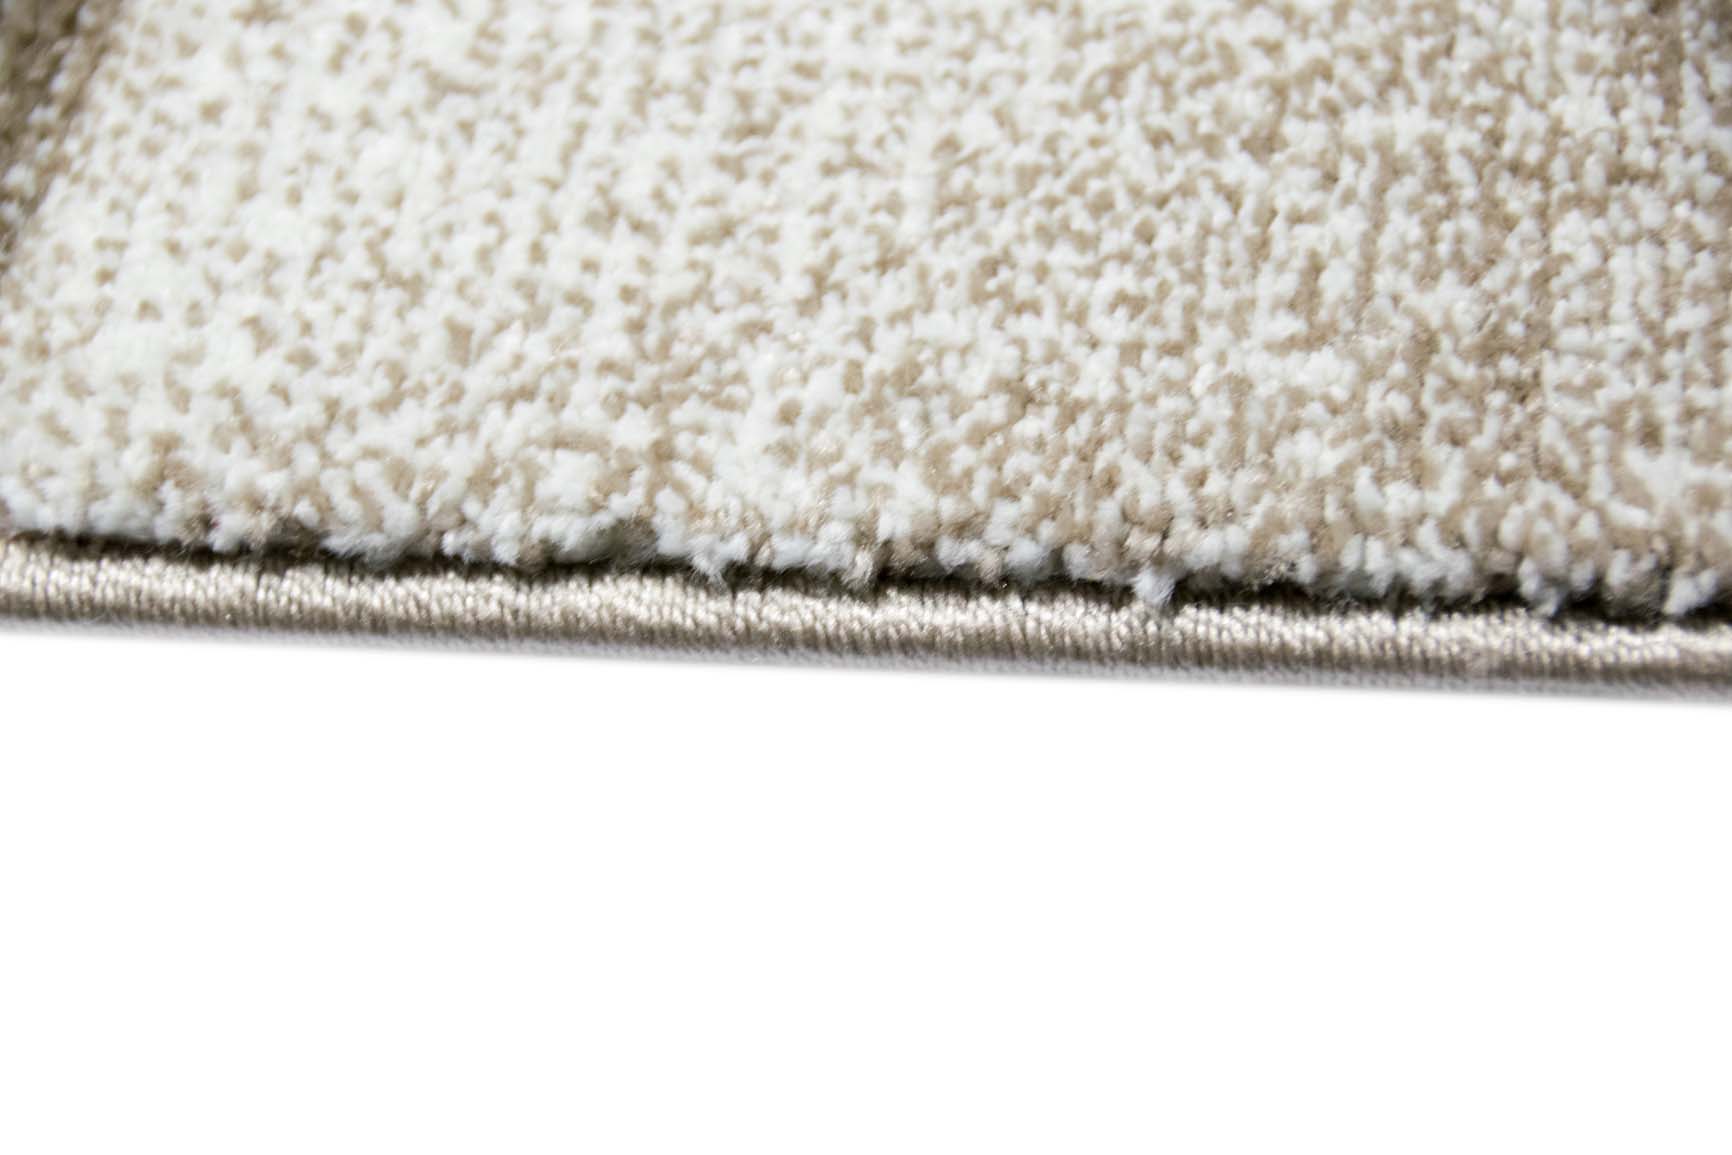 High-quality Teppich Modern & and dreams at - designer cheap carpet -Traum carpets: